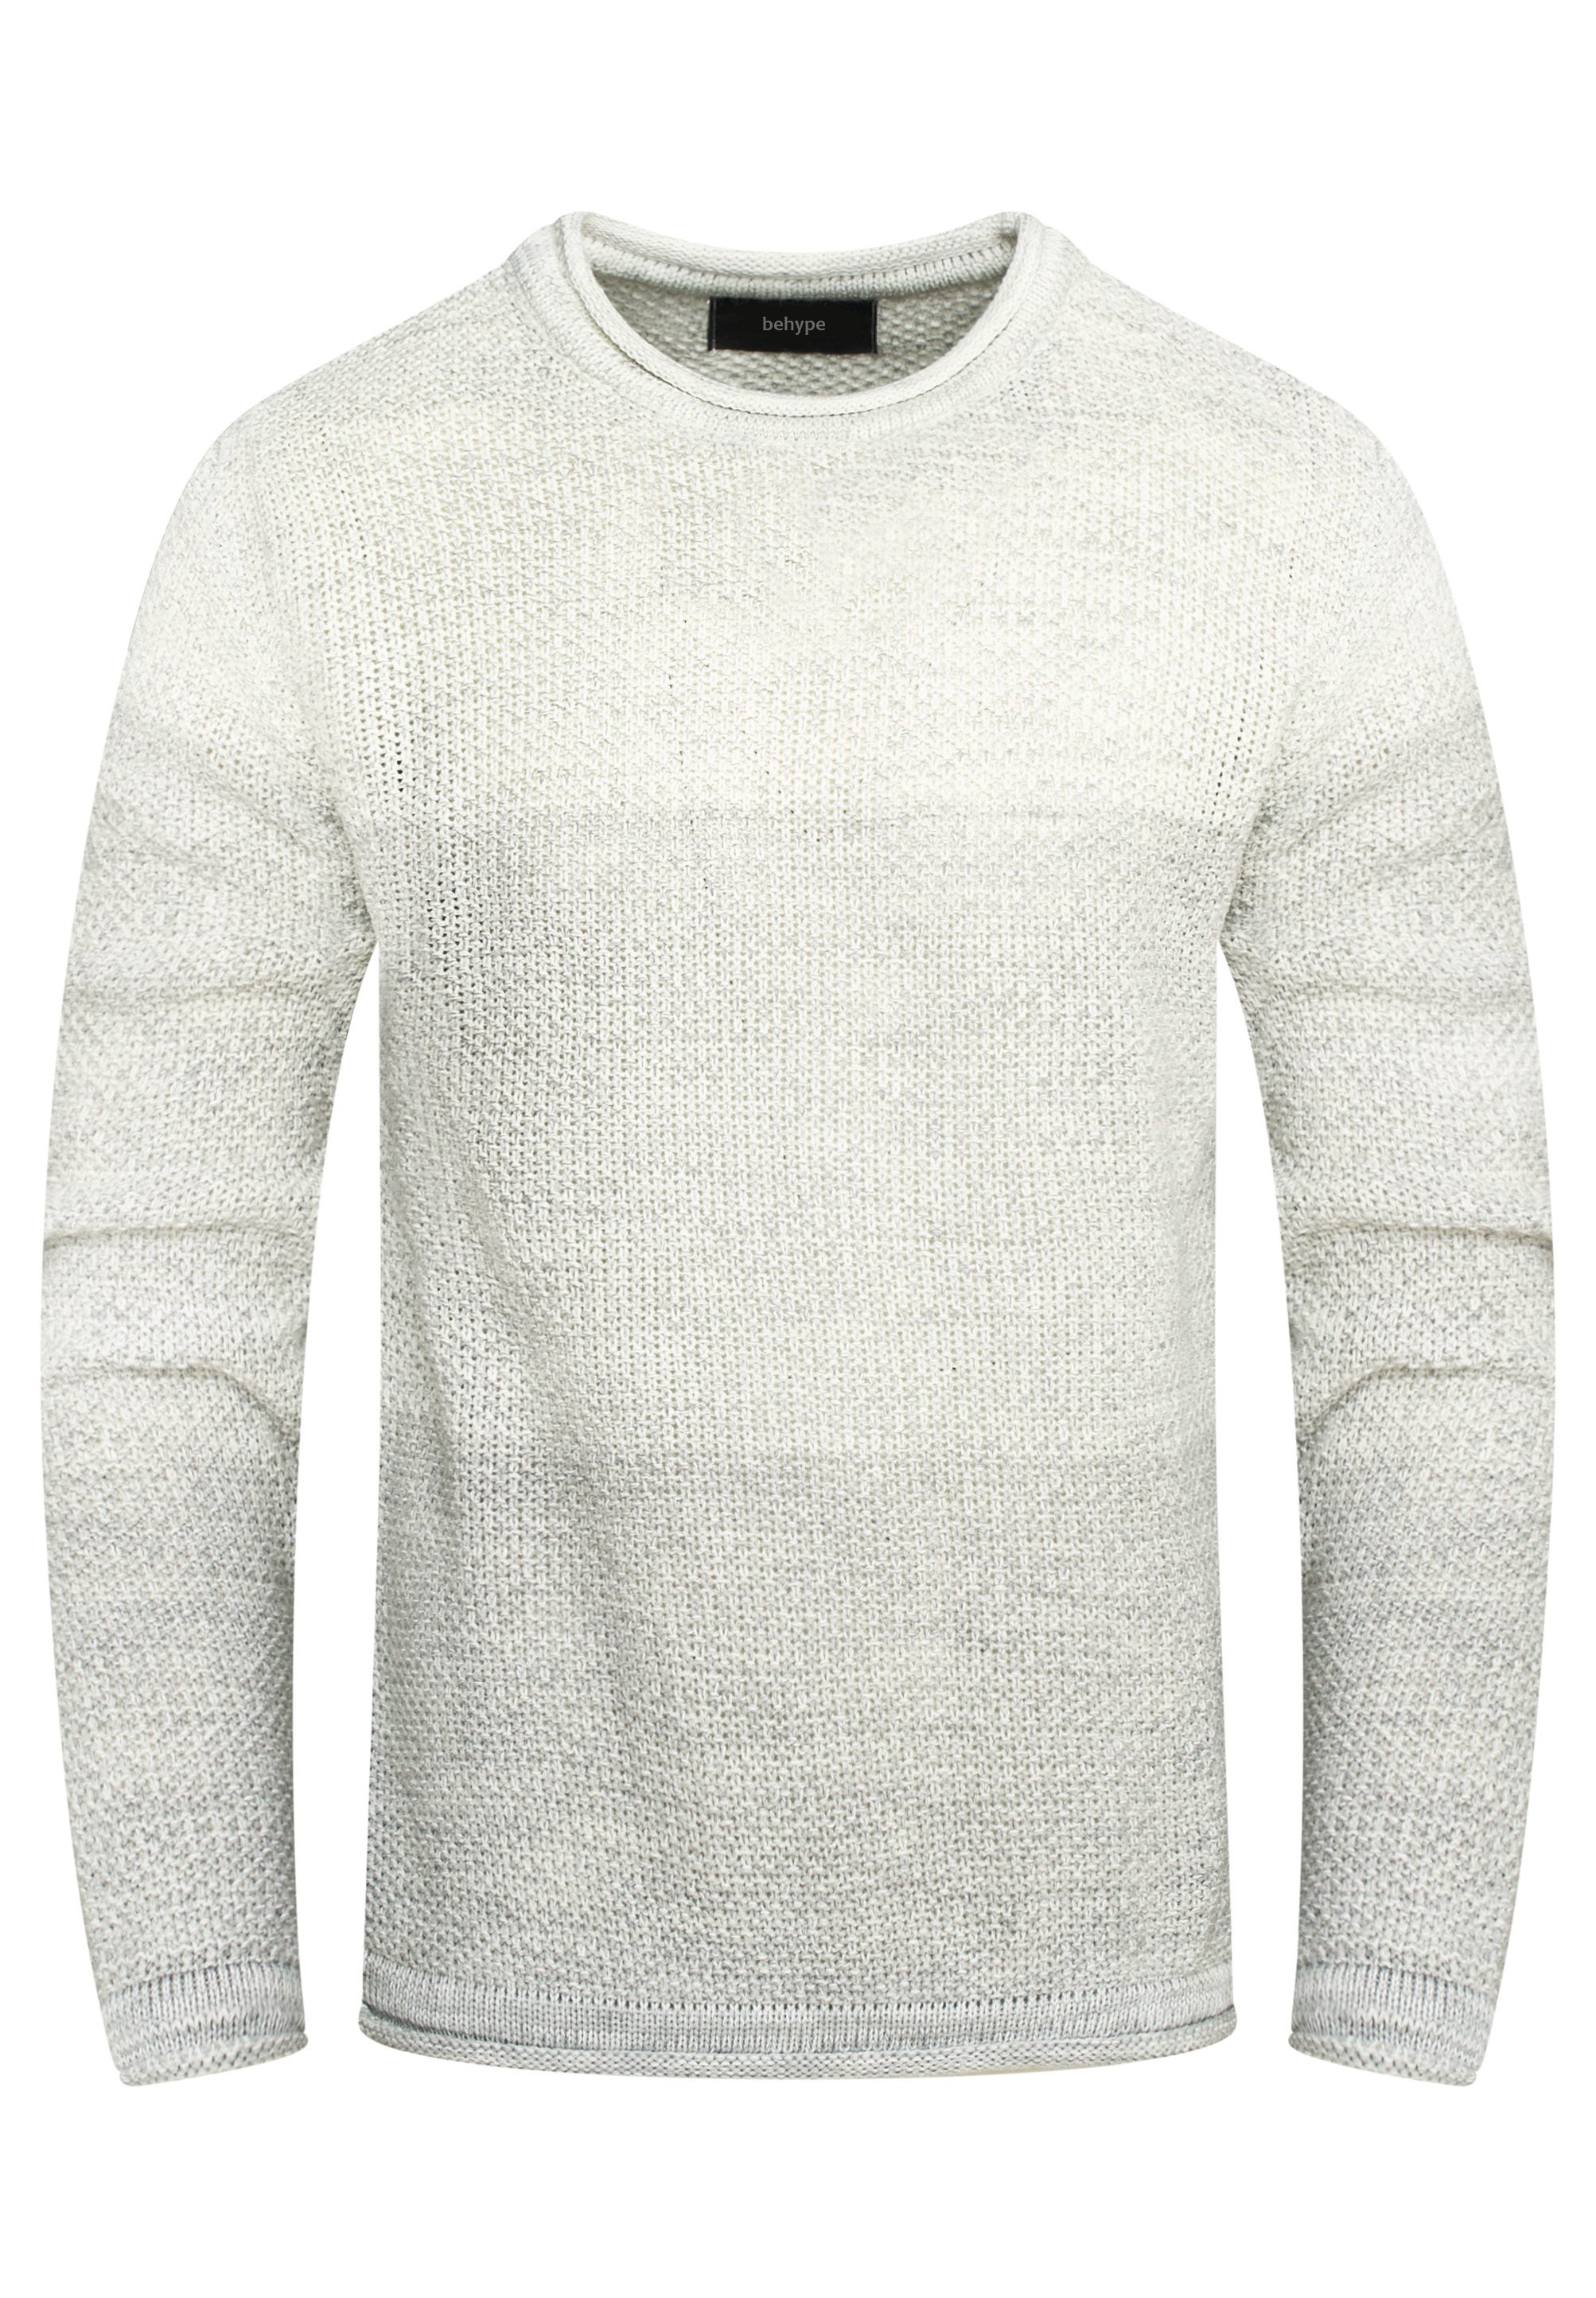 Пуловер behype MKBlone, серый